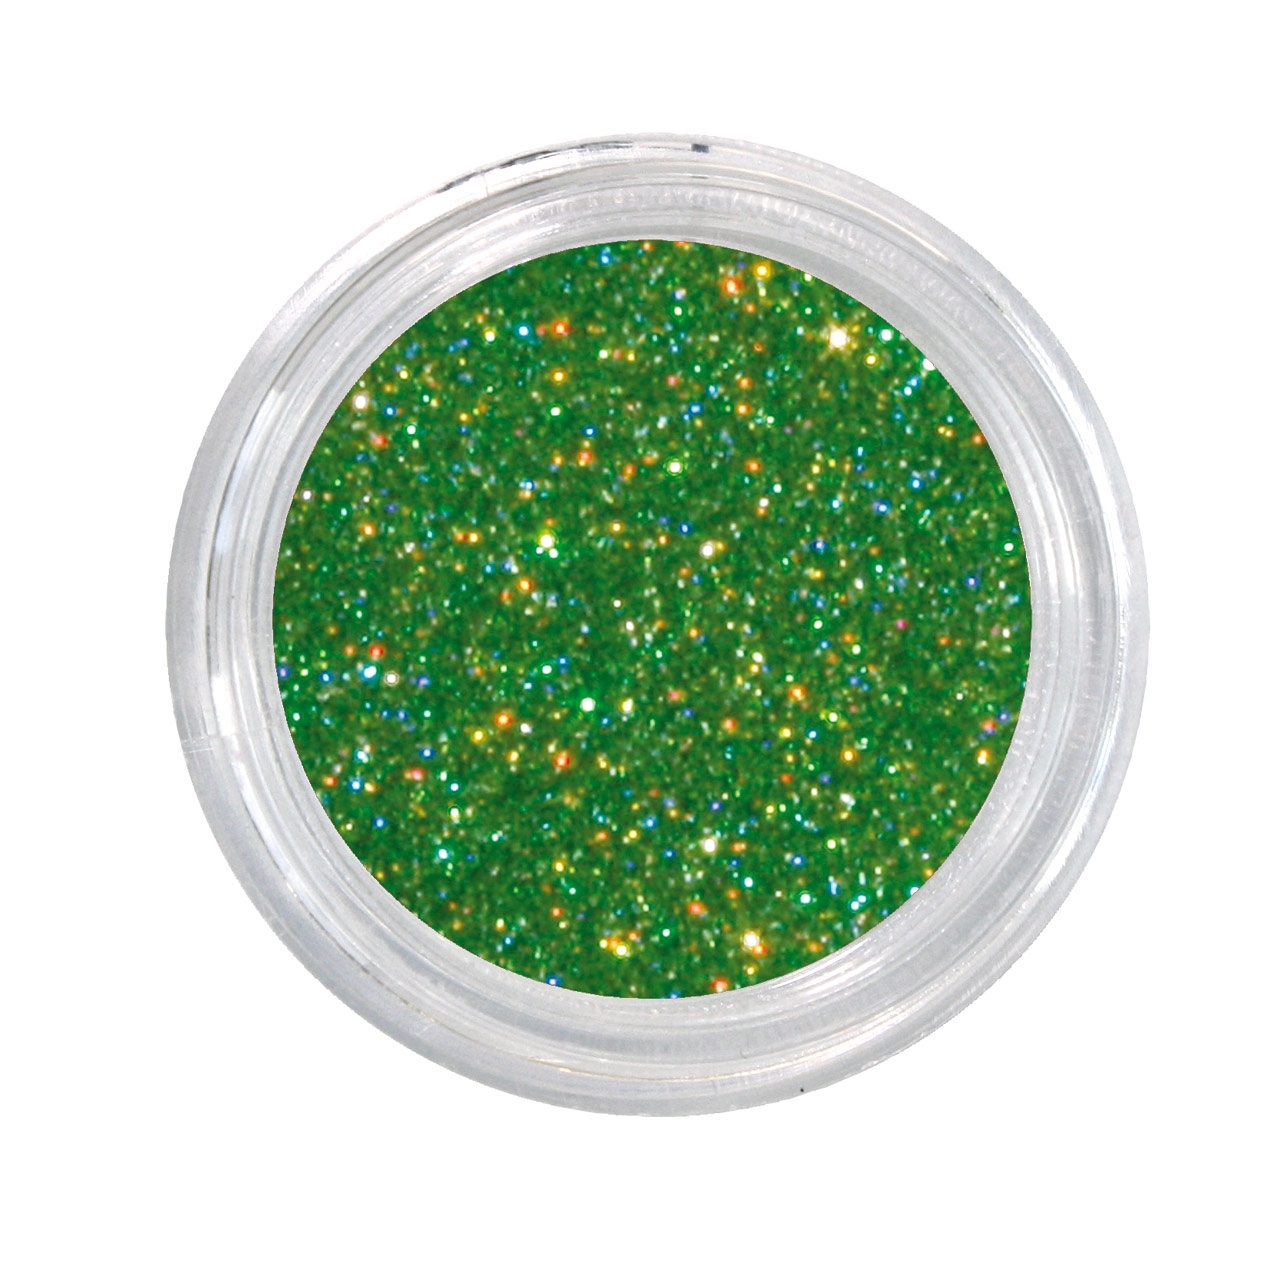 BAEHR BEAUTY CONCEPT NAILS Nail Art Glitterpulver grün